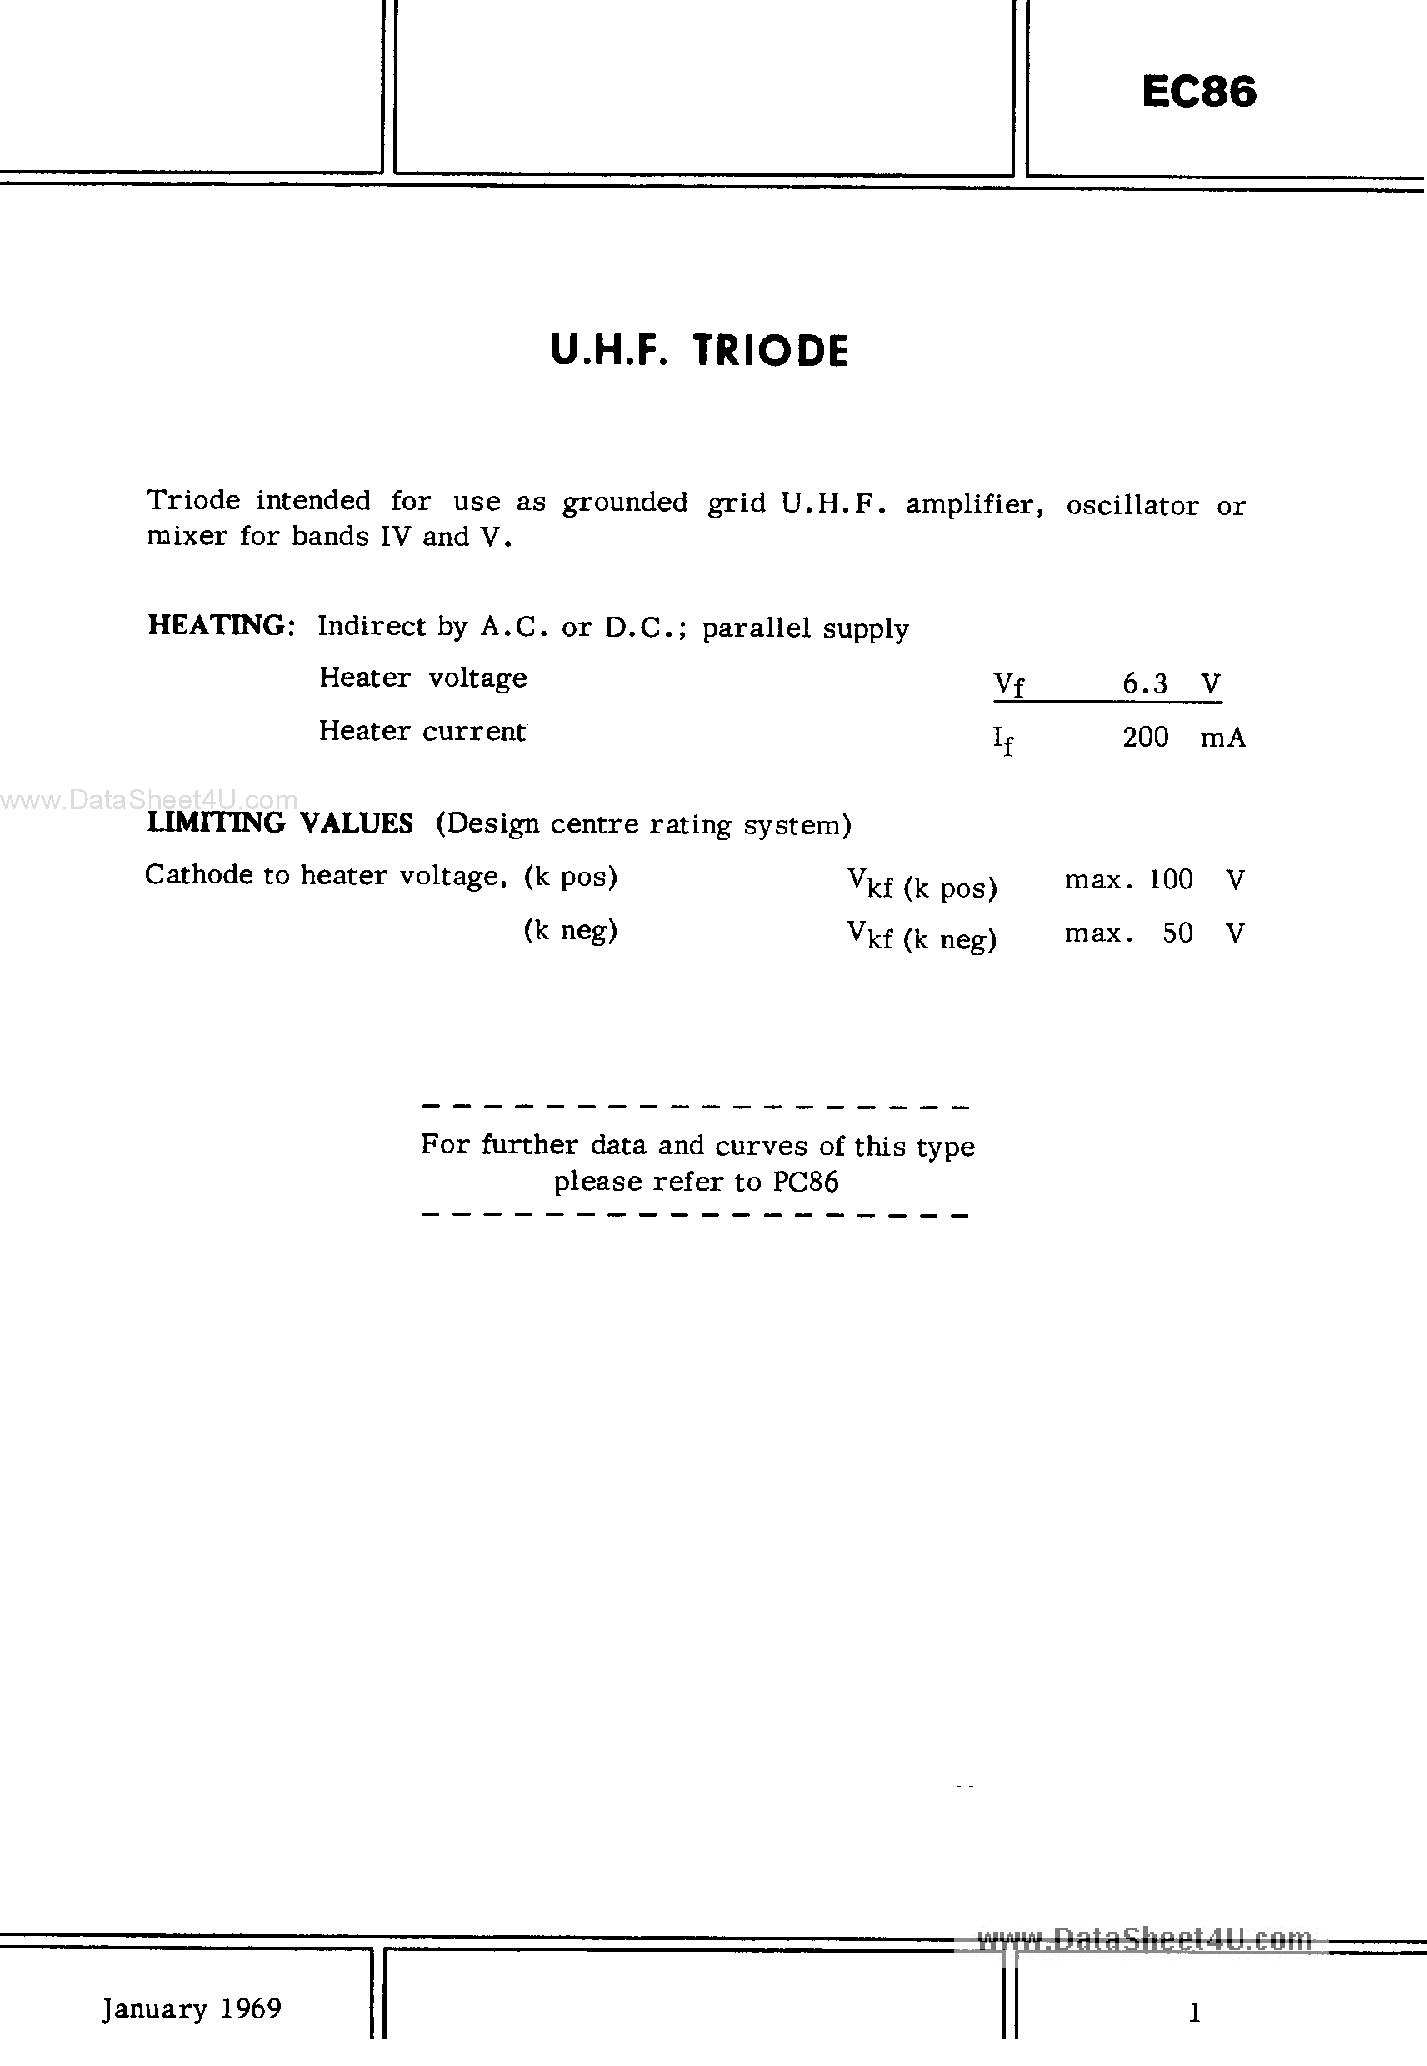 Datasheet EC86 - U.H.F TRIODE page 1